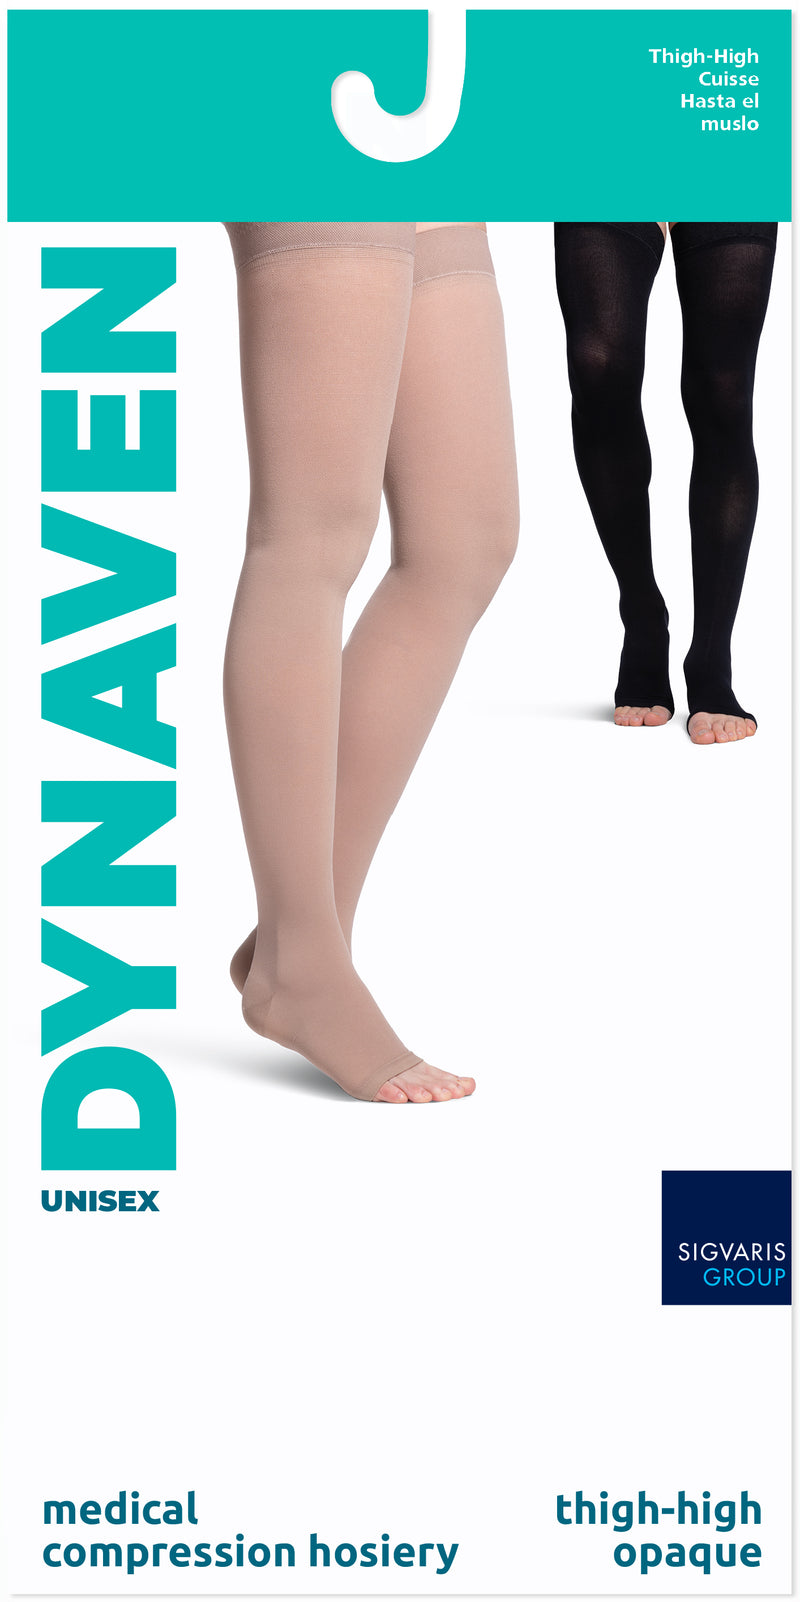 Sigvaris Women's DYNAVEN Thigh-High Open-Toe